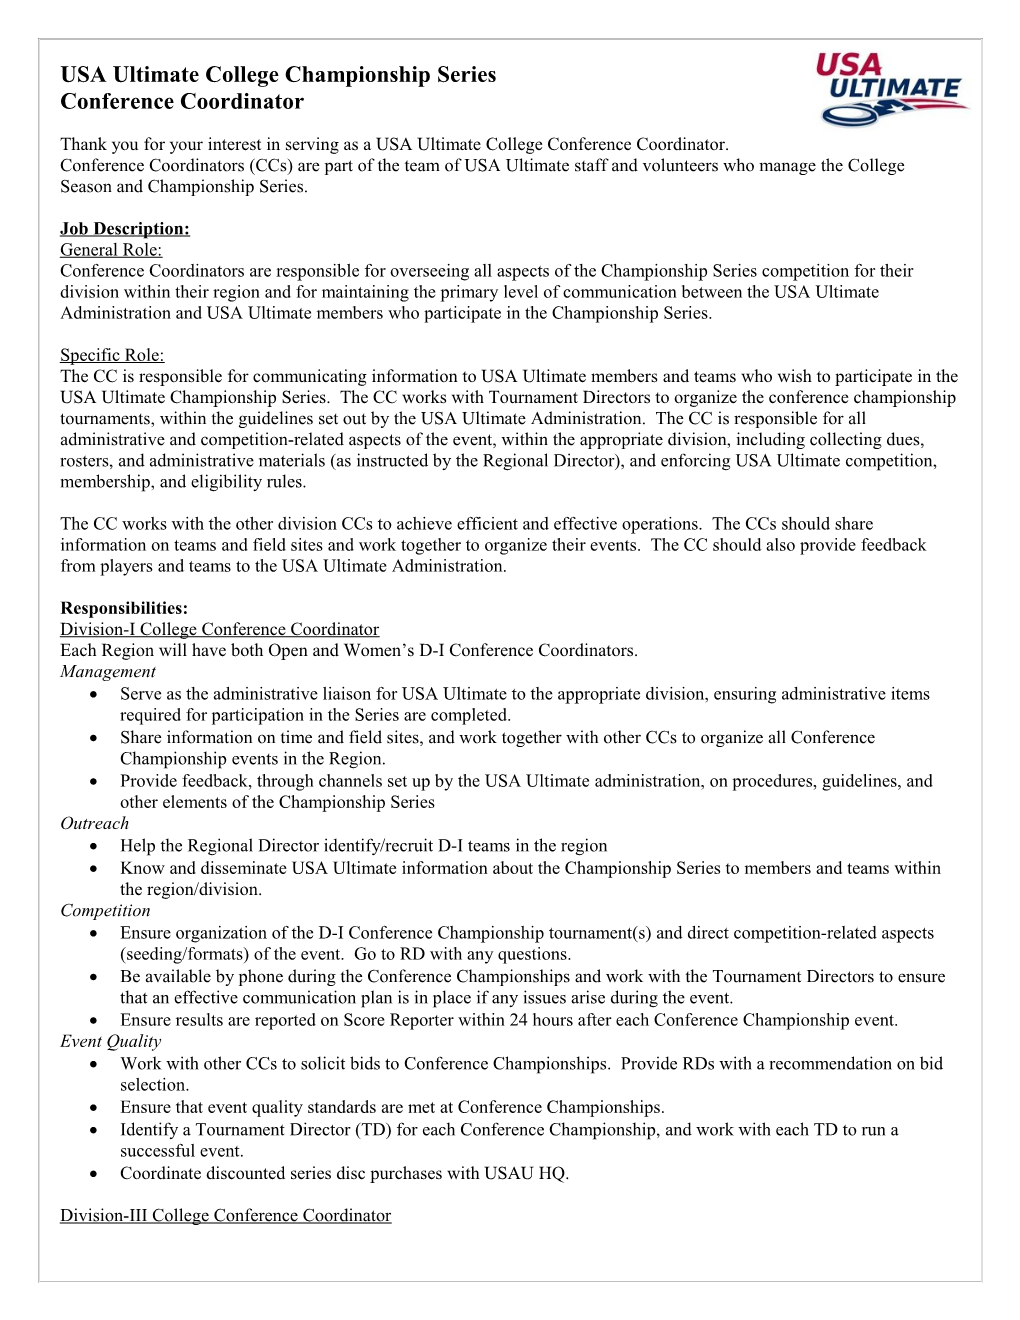 Sectional Coordinator Job Description